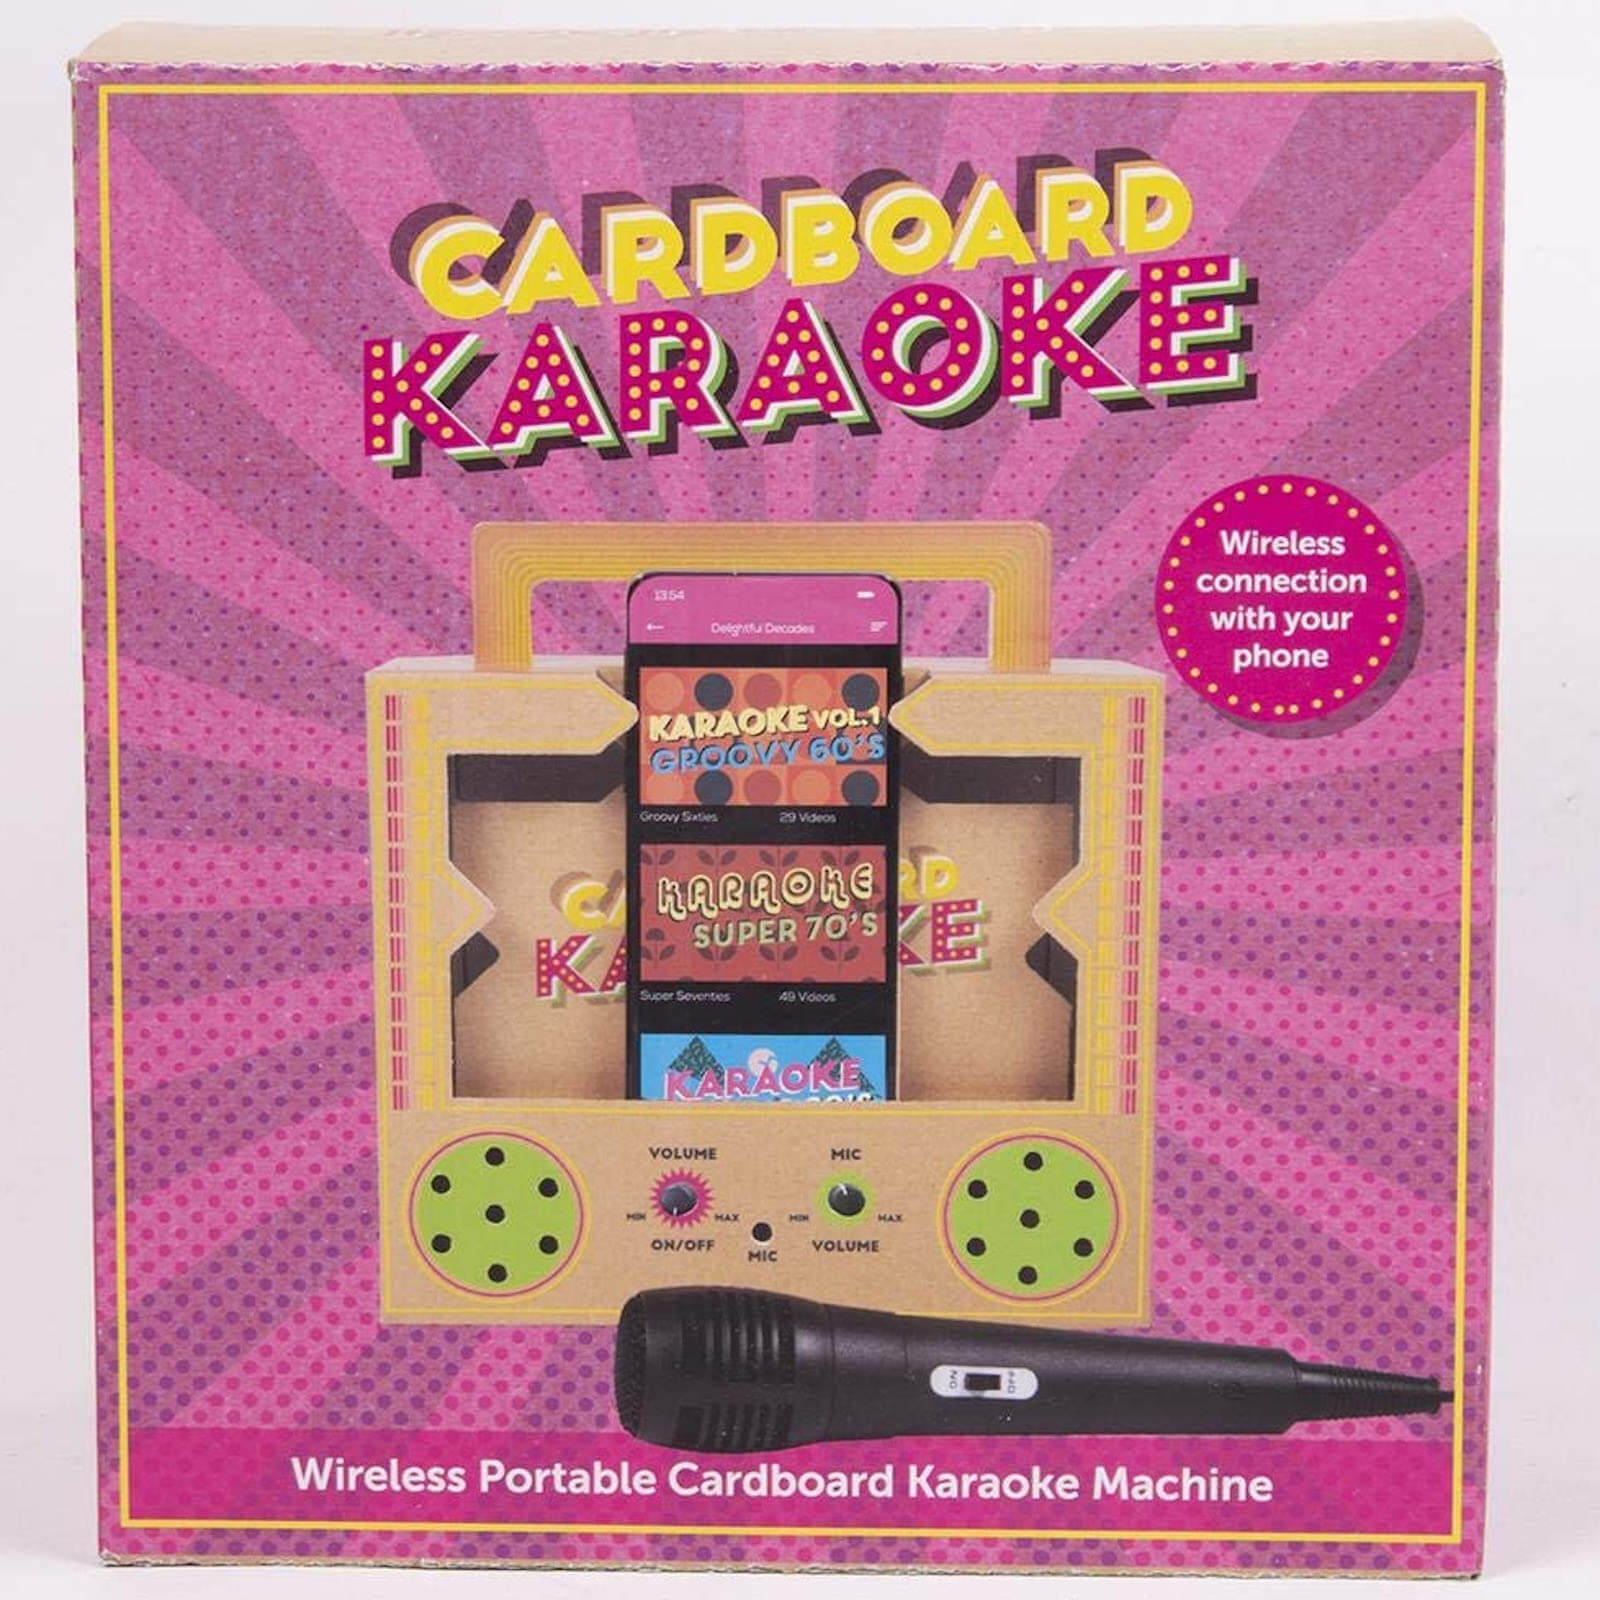 Cardboard Karaoke